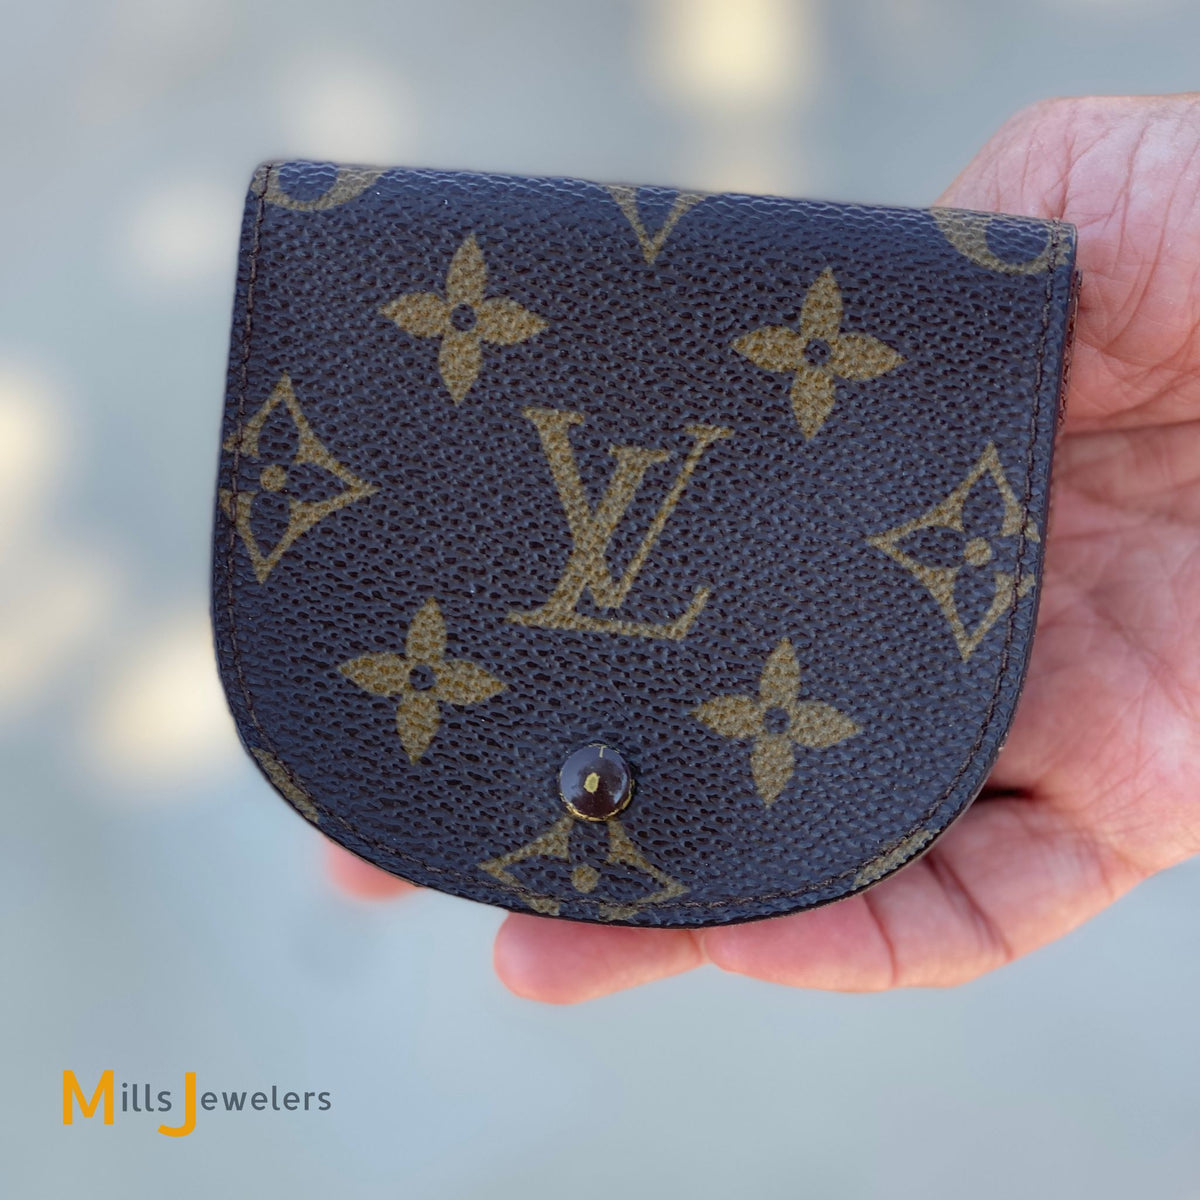 Louis-Vuitton-Monogram-Porte-Monnaie-Gousset-Coin-Case-M61970